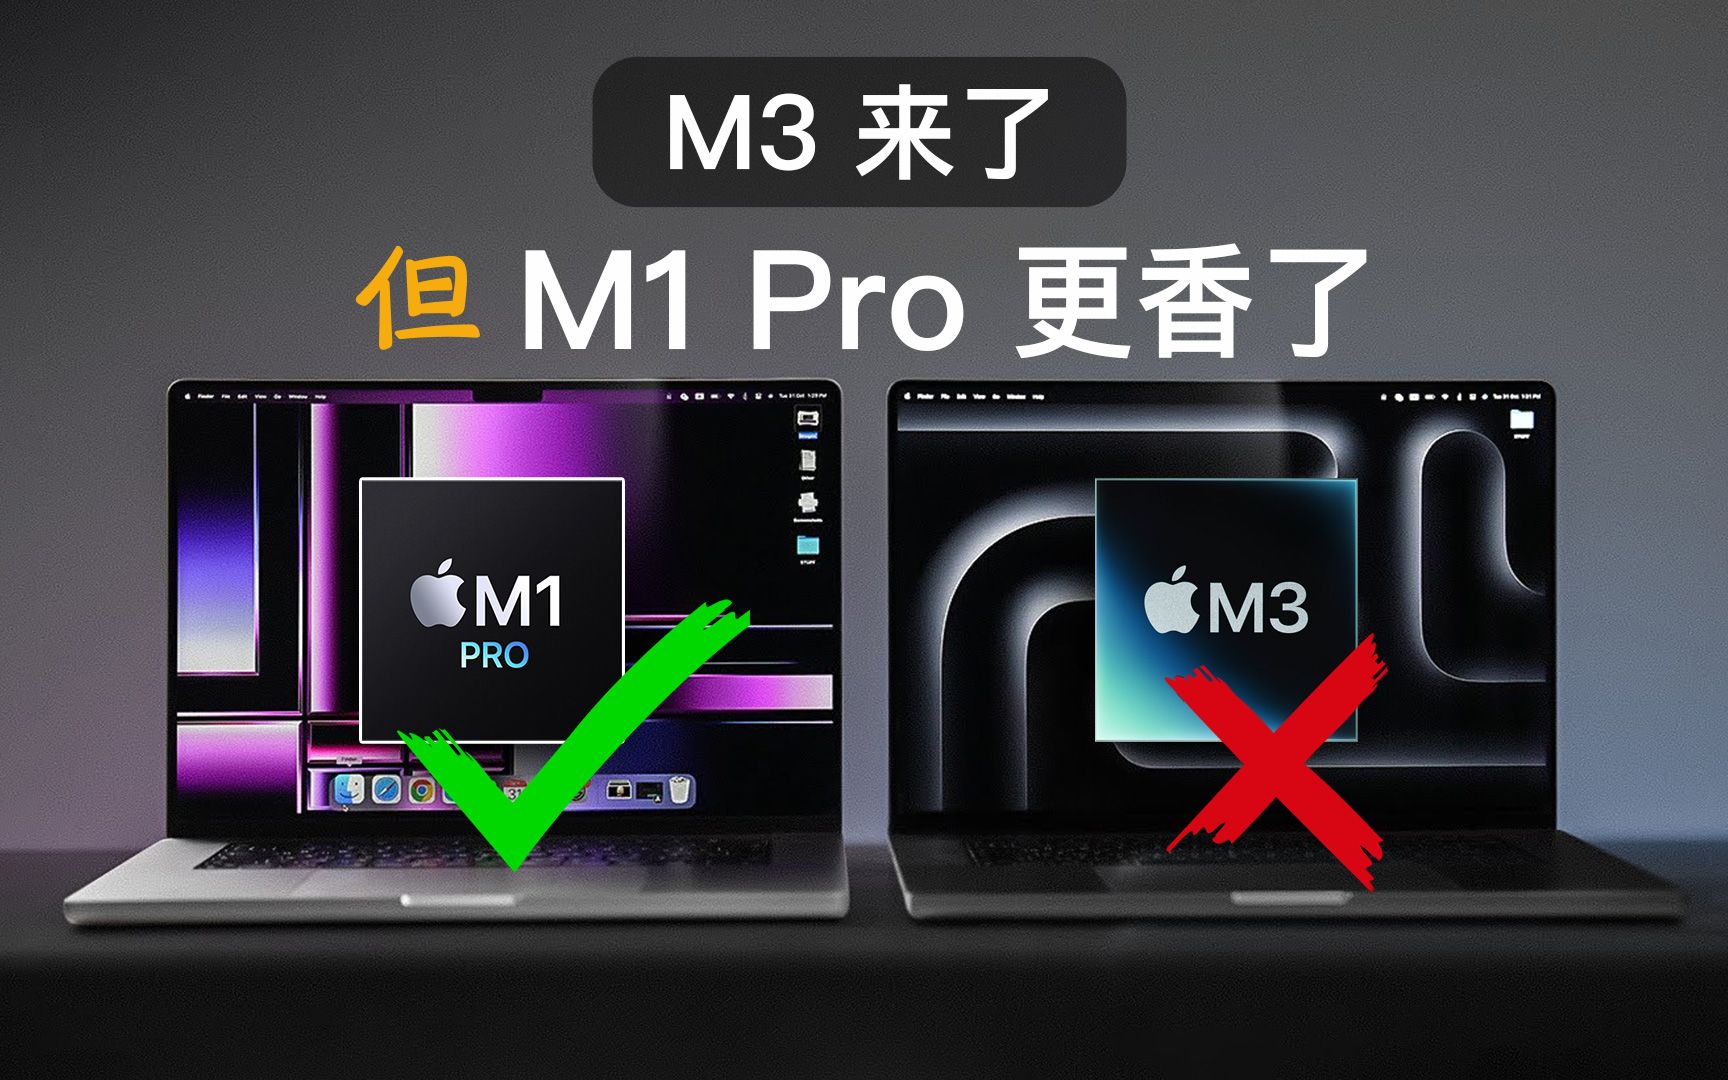 M3来了，M1 Pro更香了｜基础款14寸MacBook Pro怎么选